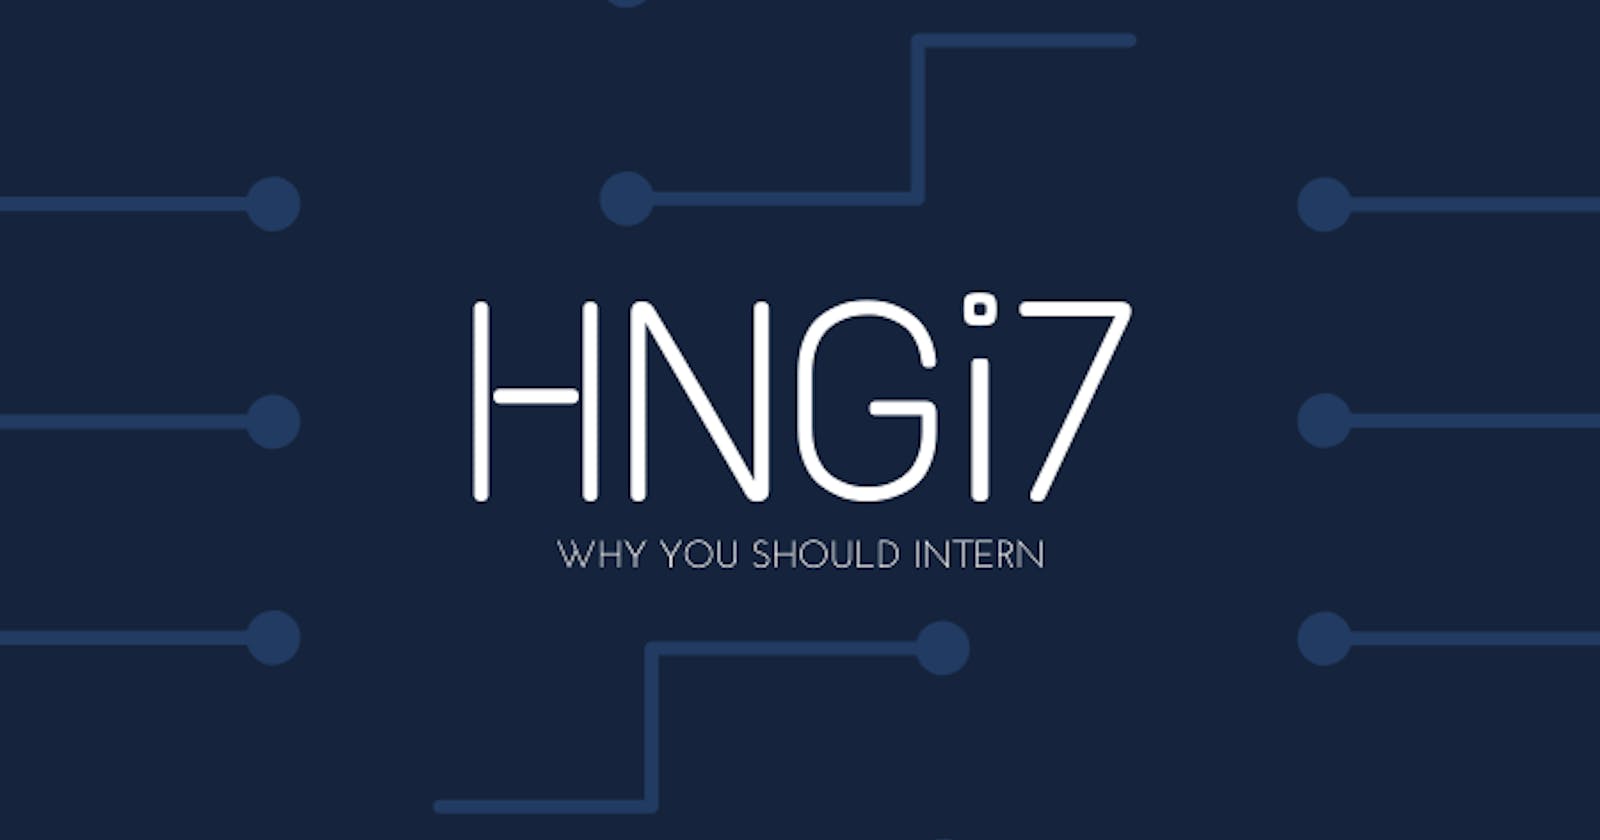 Why you should intern at HNGi7